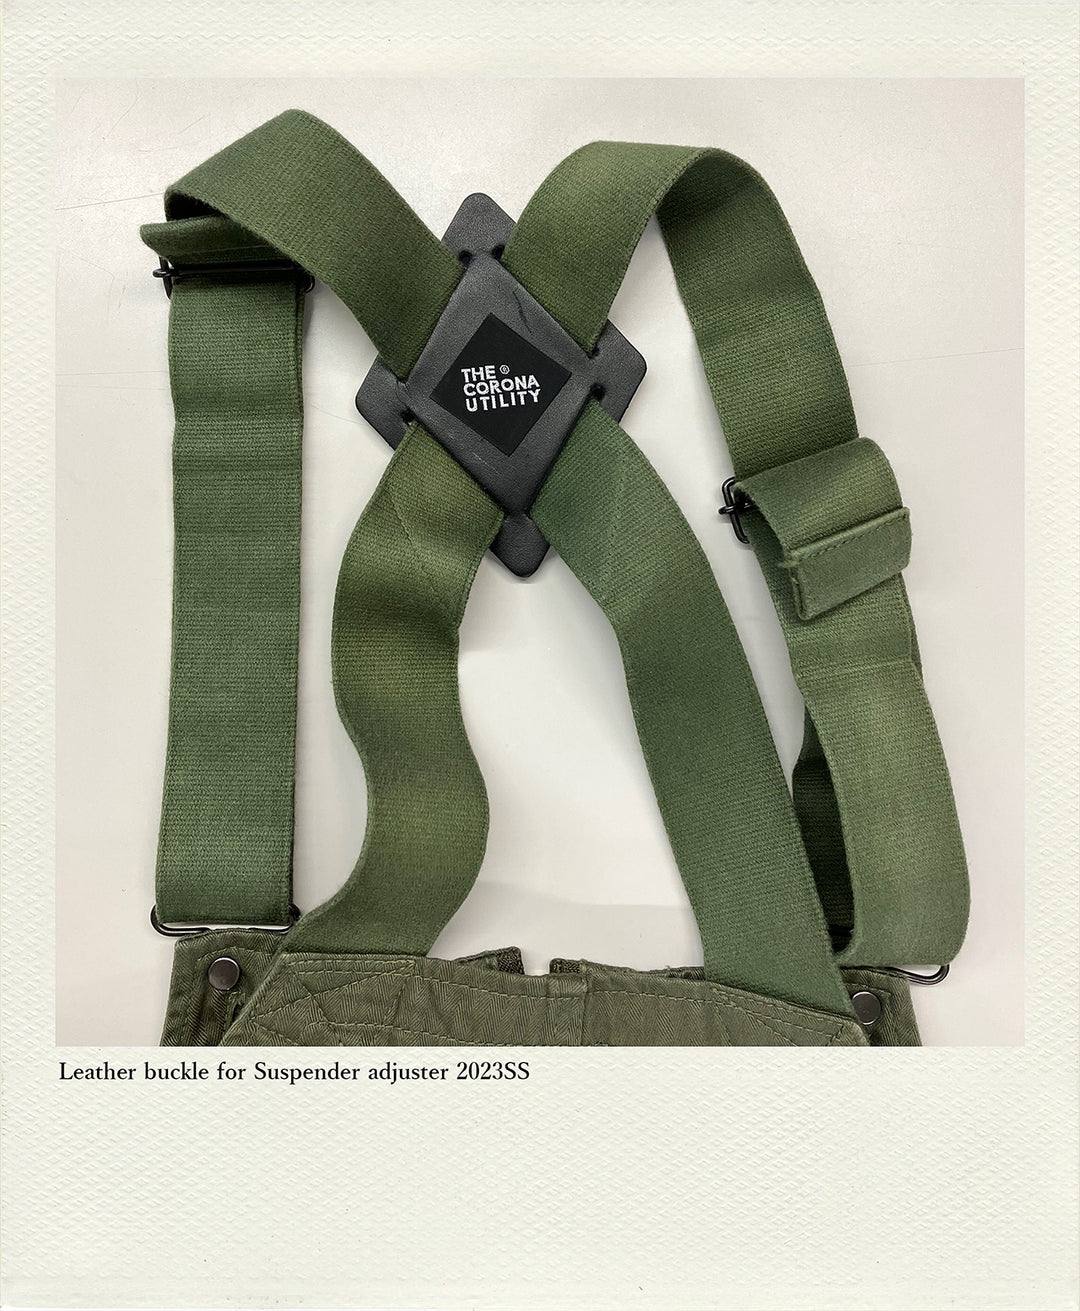 Leather buckle for Suspender adjuster 2023SS